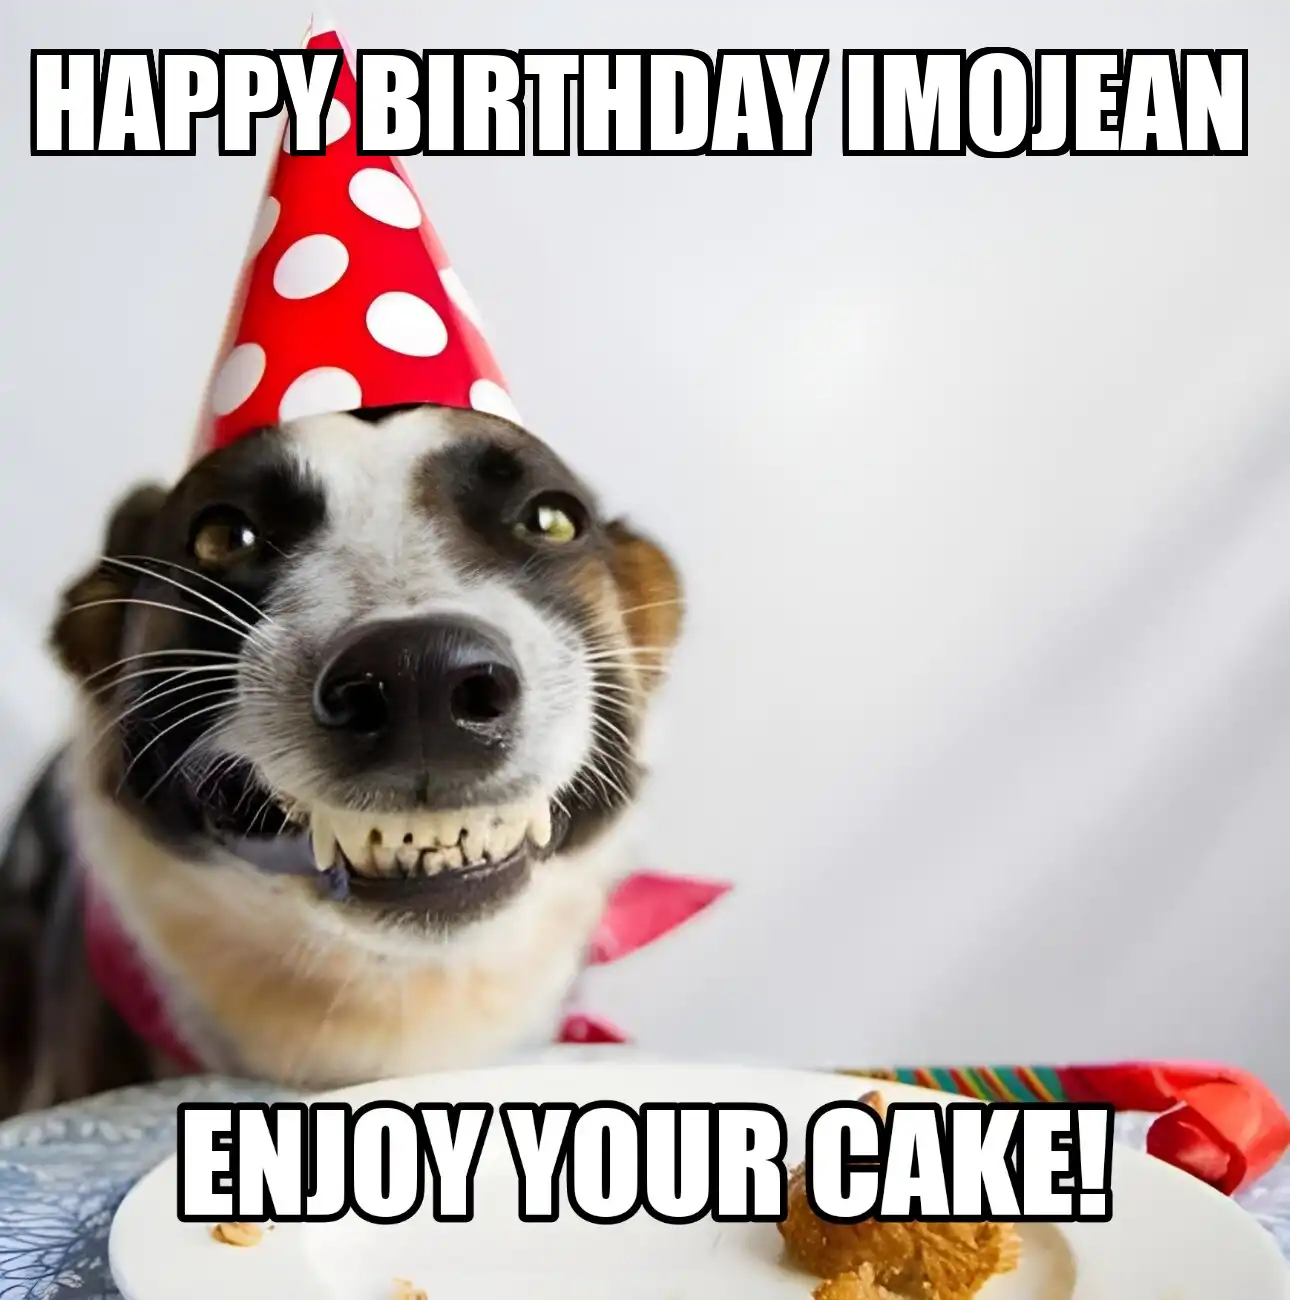 Happy Birthday Imojean Enjoy Your Cake Dog Meme